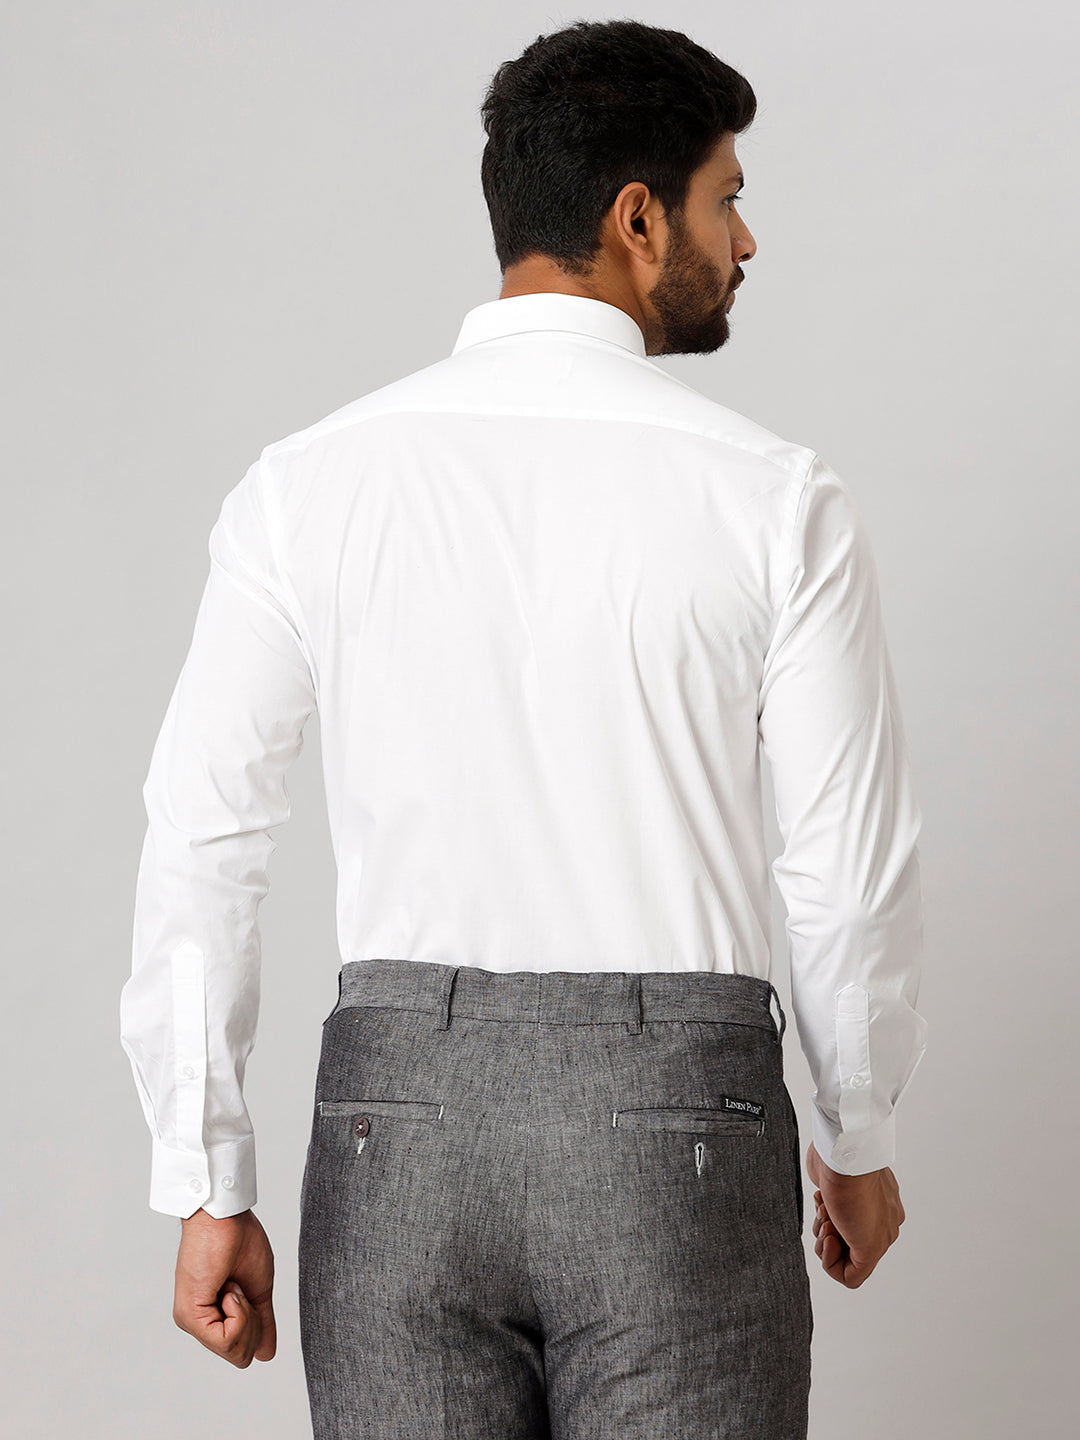 Mens uniform 100% Cotton Full Sleeve White Shirt Victory-Back view